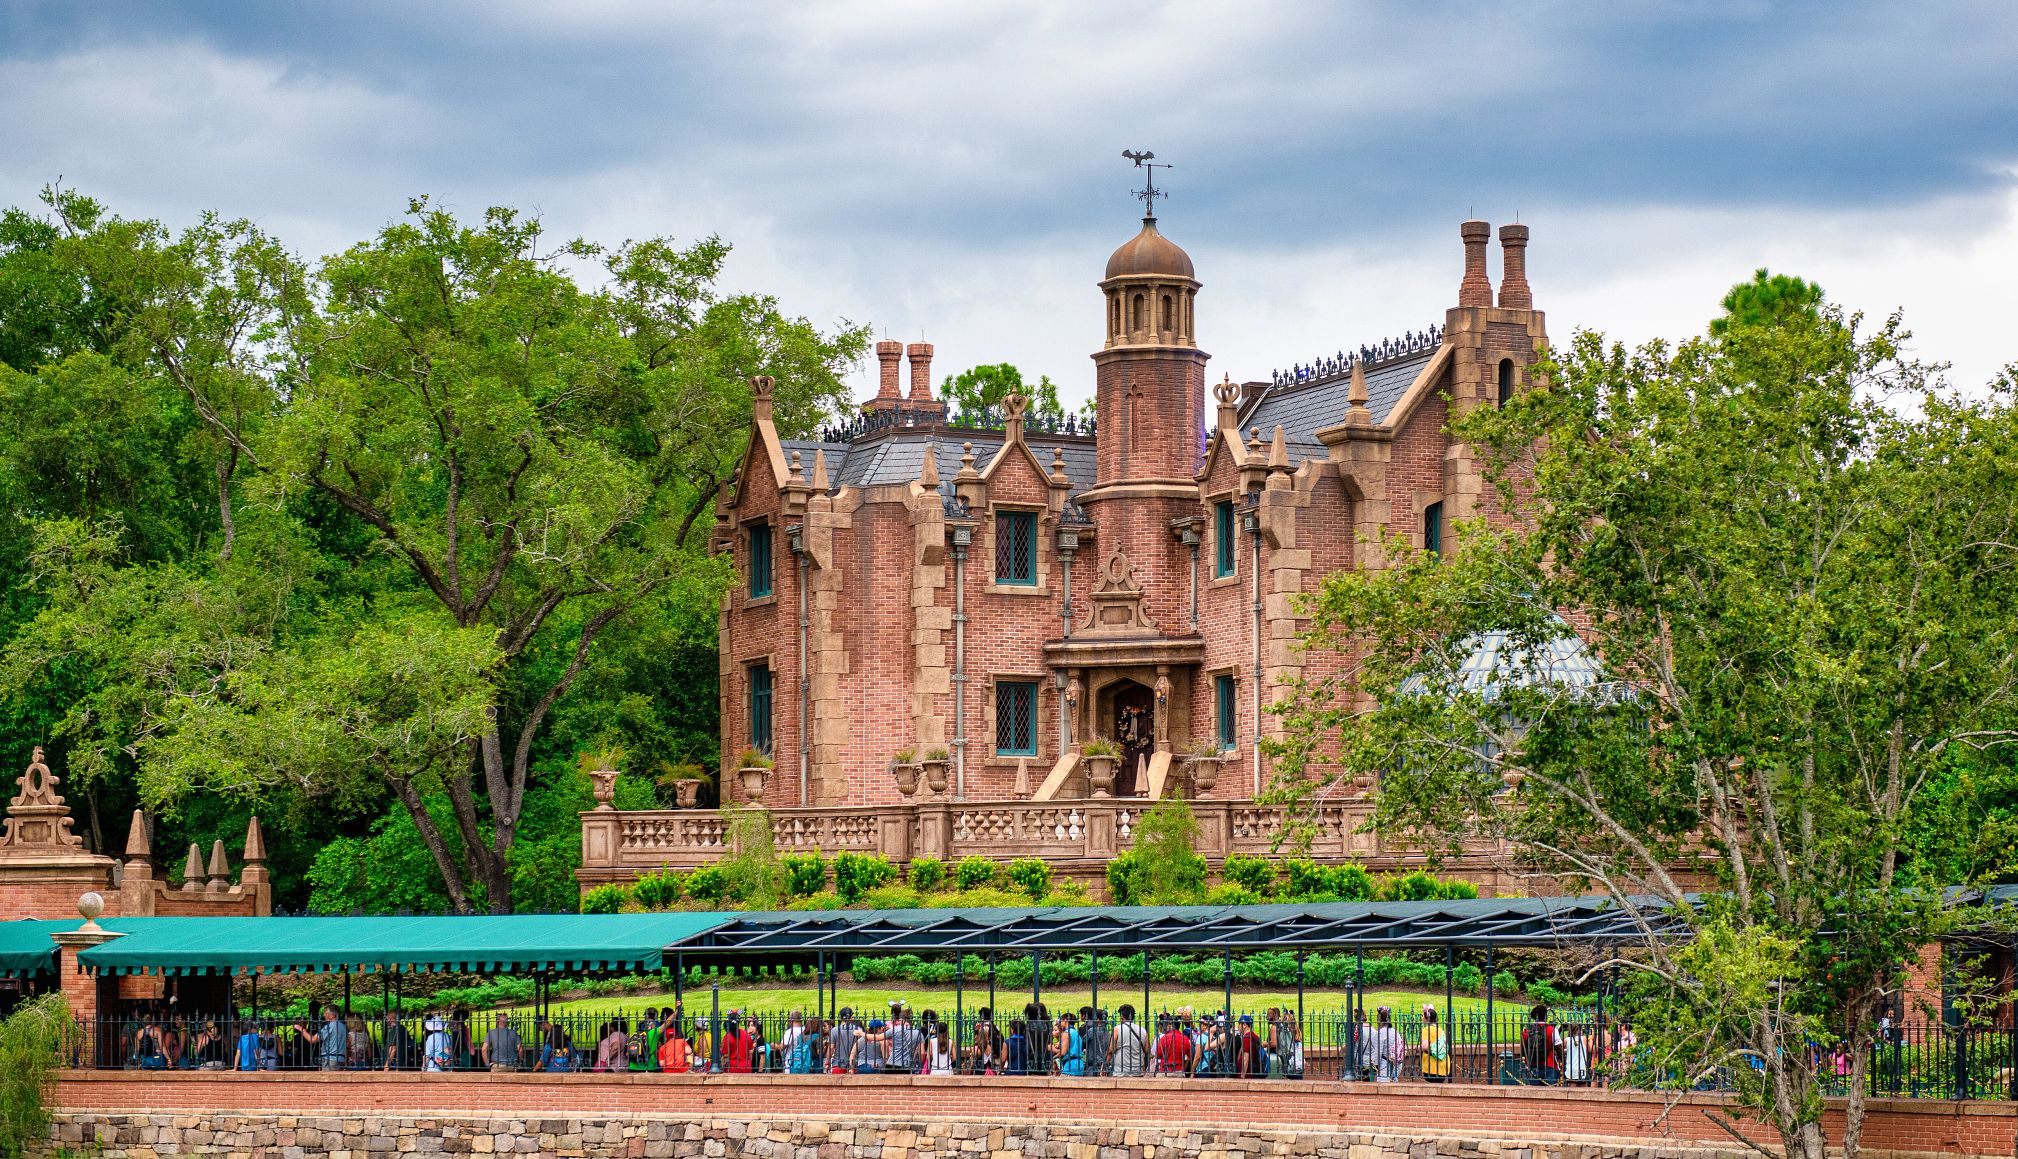 Line-up of people at Walt Disney World's Magic Kingdom amusement park